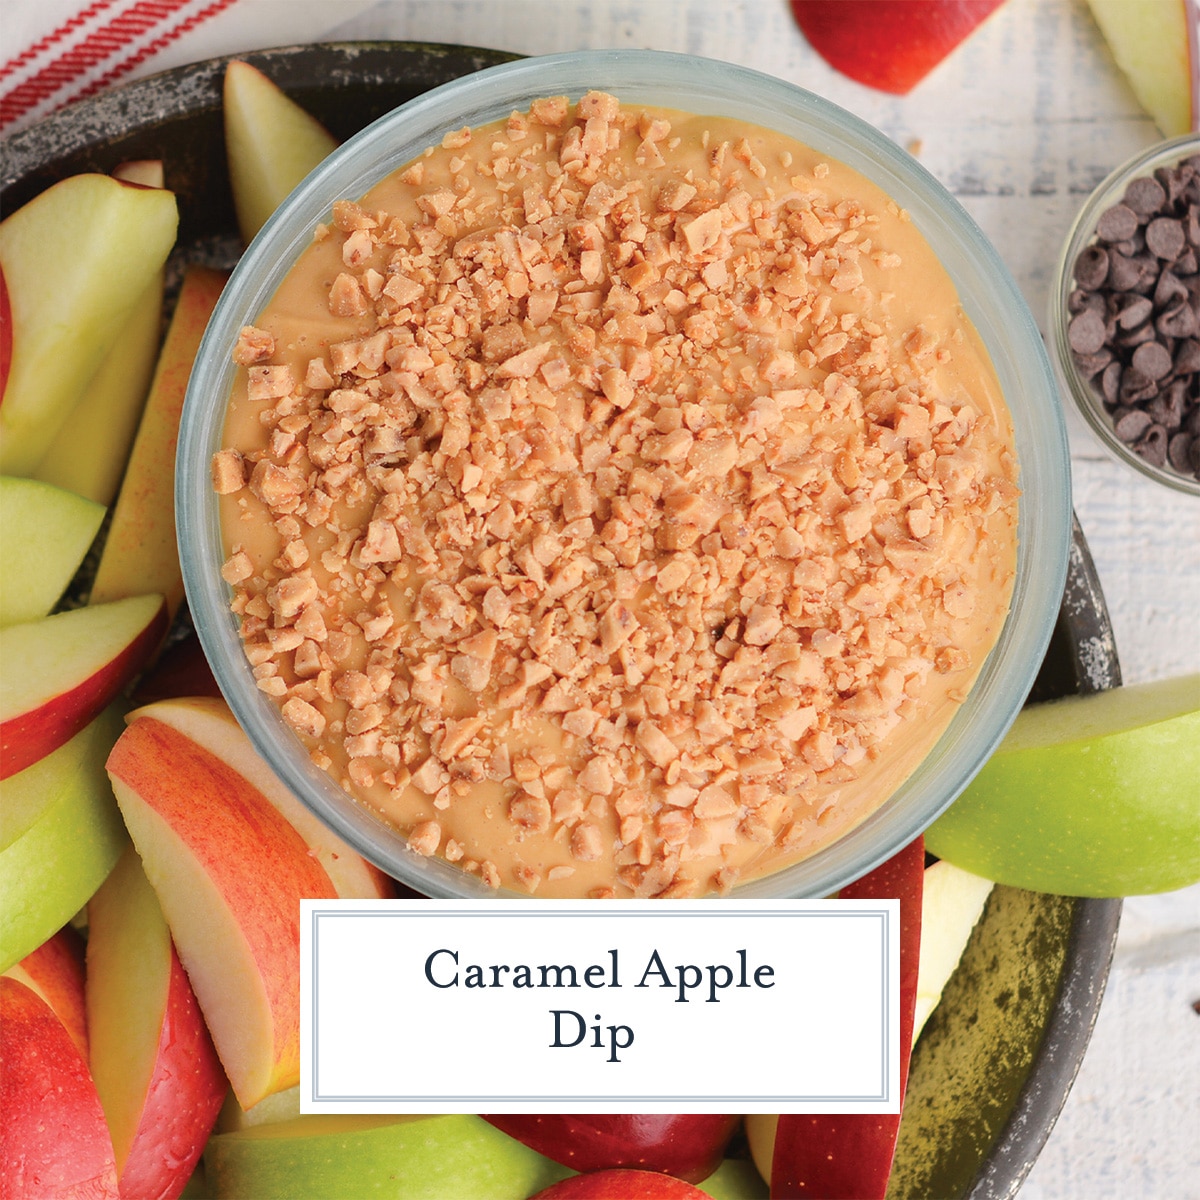 caramel apple dip recipe with text overlay